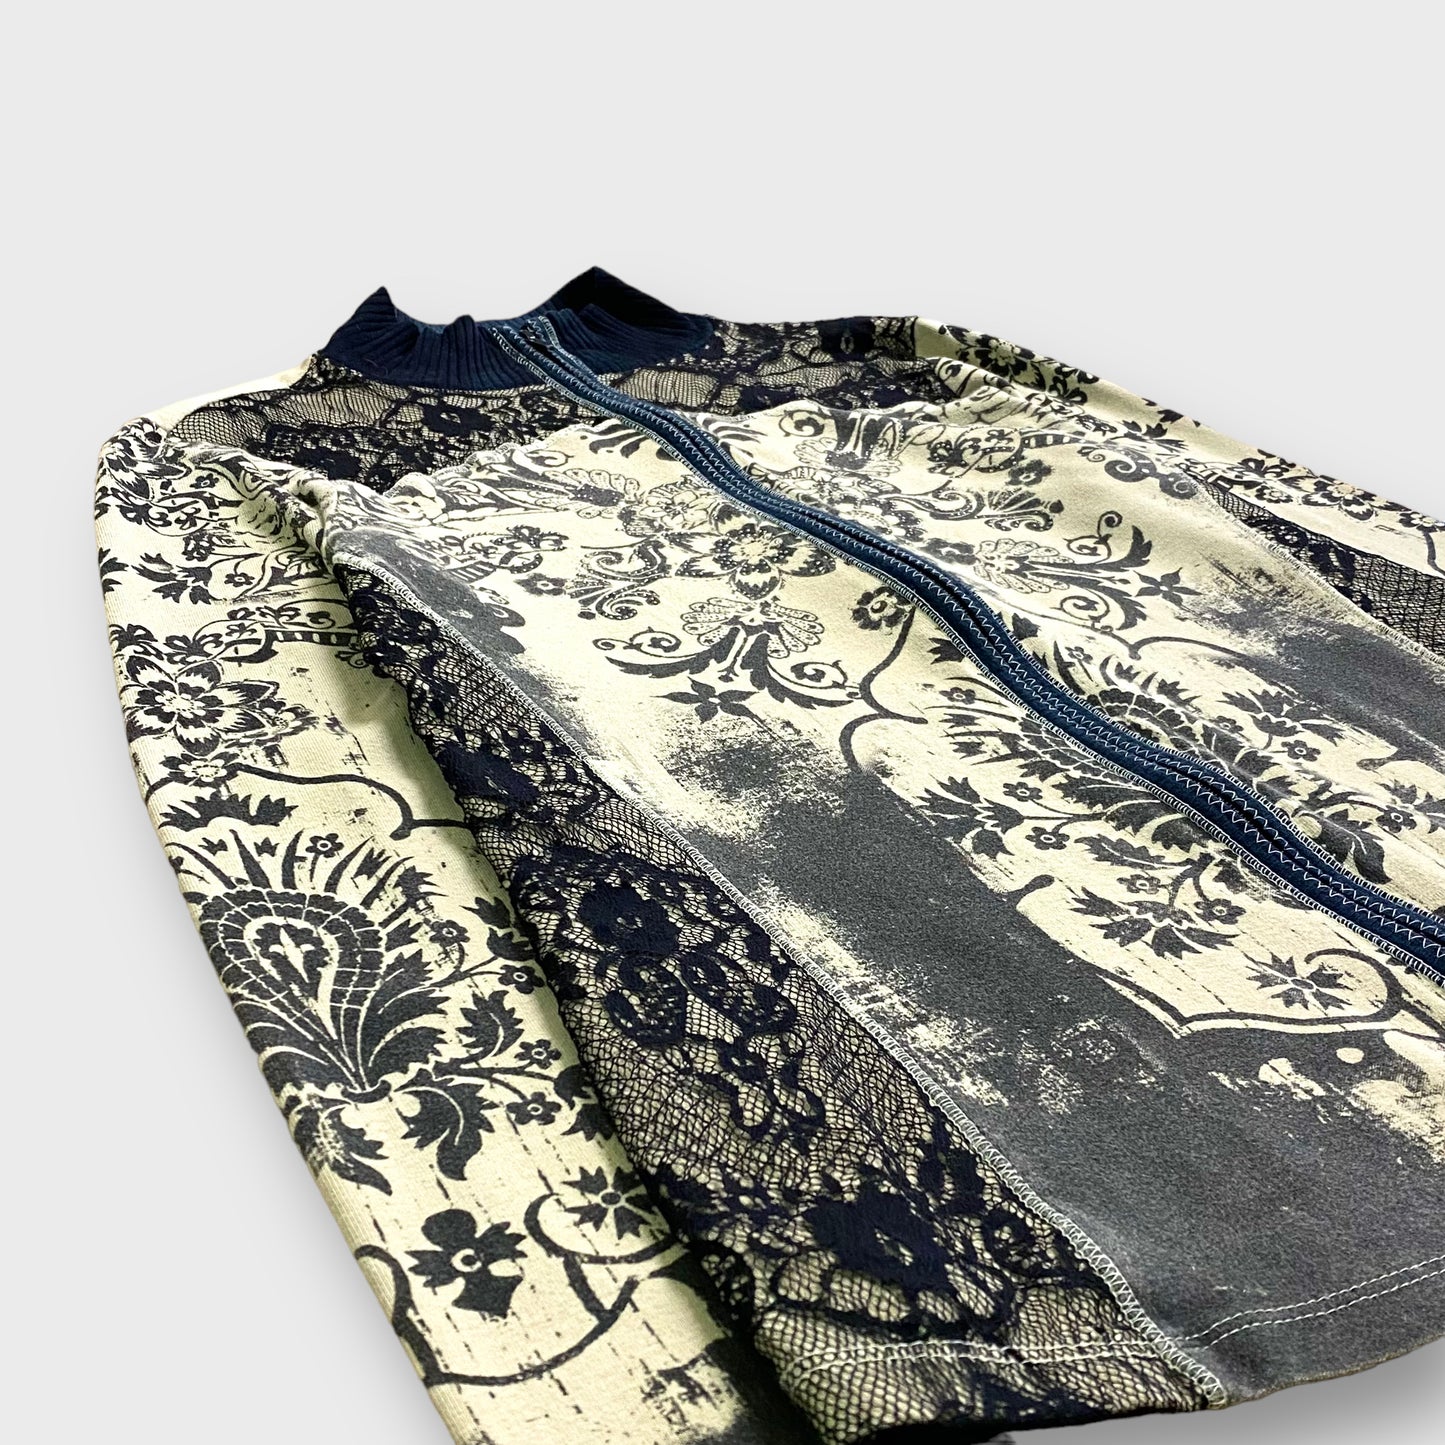 Flower pattern cotton track jacket